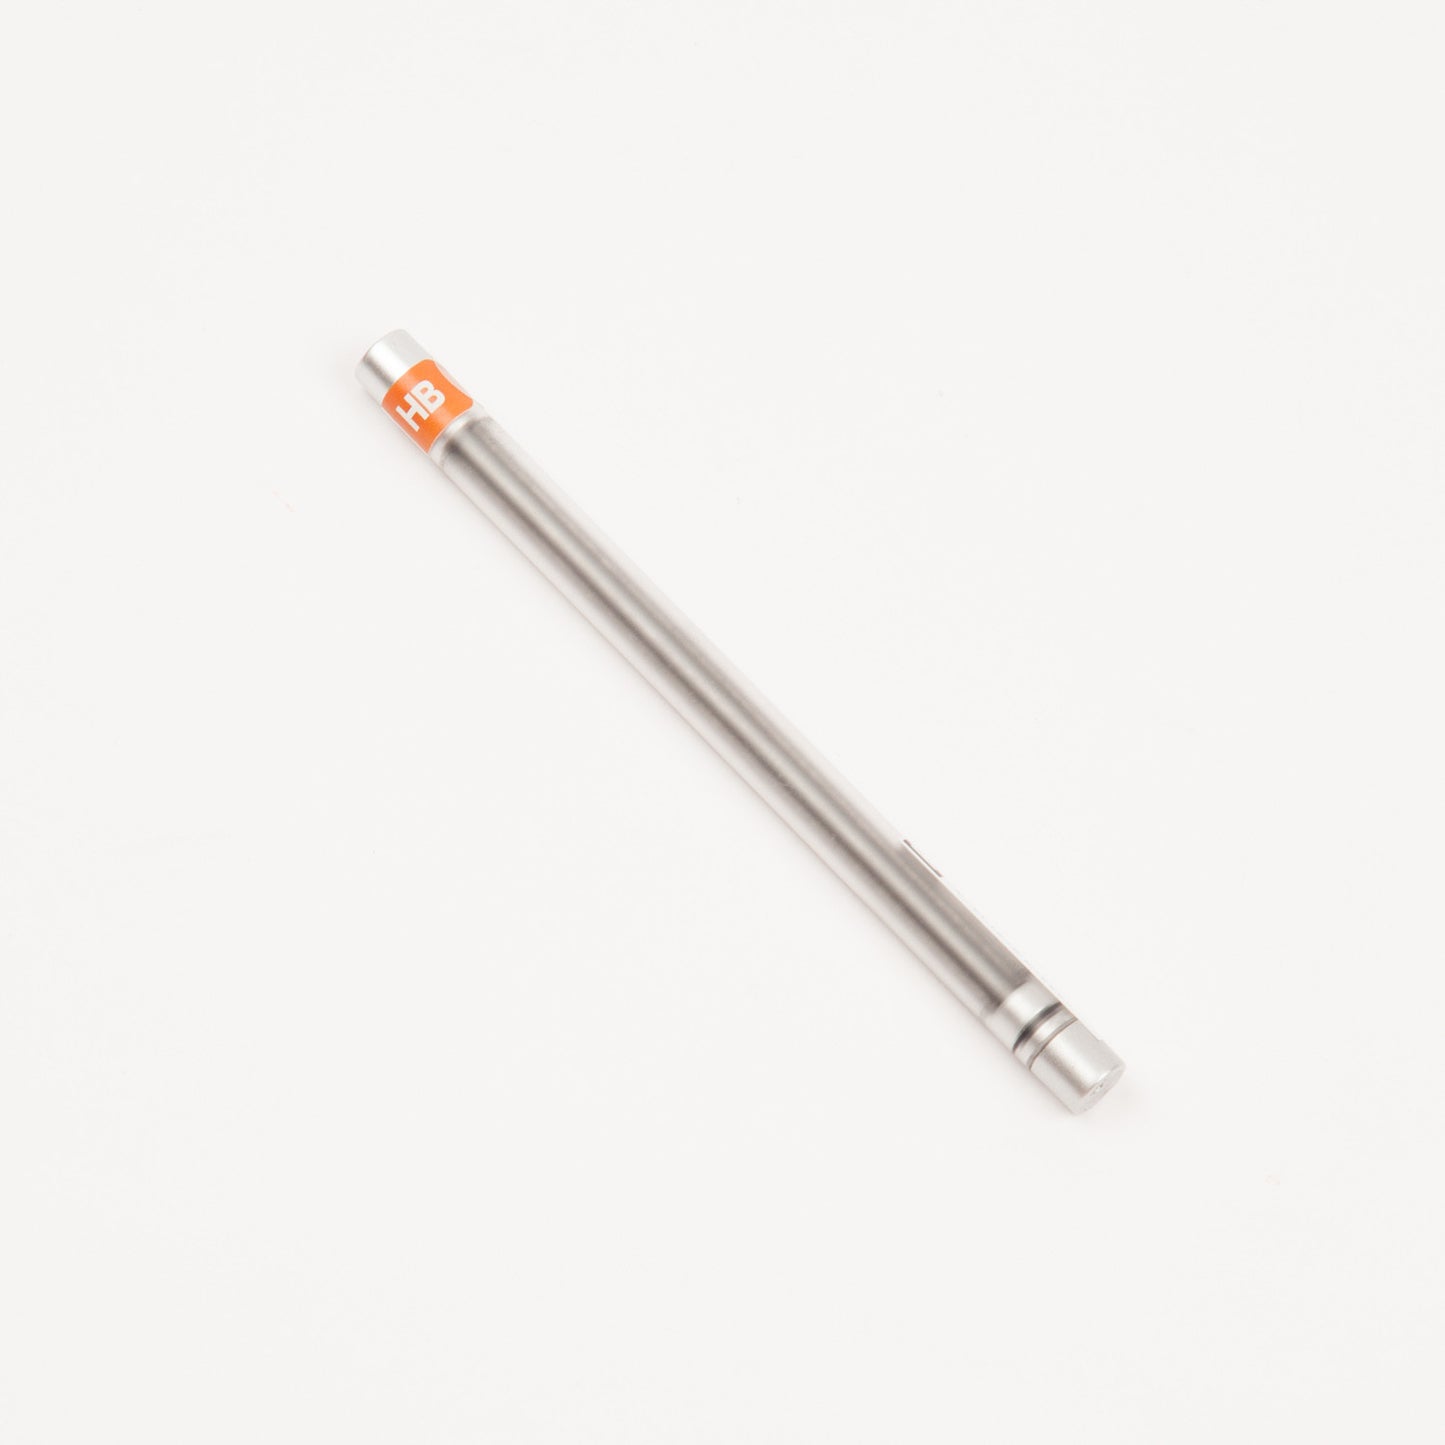 Ohto Maruta Mechanical Pencil - Refill